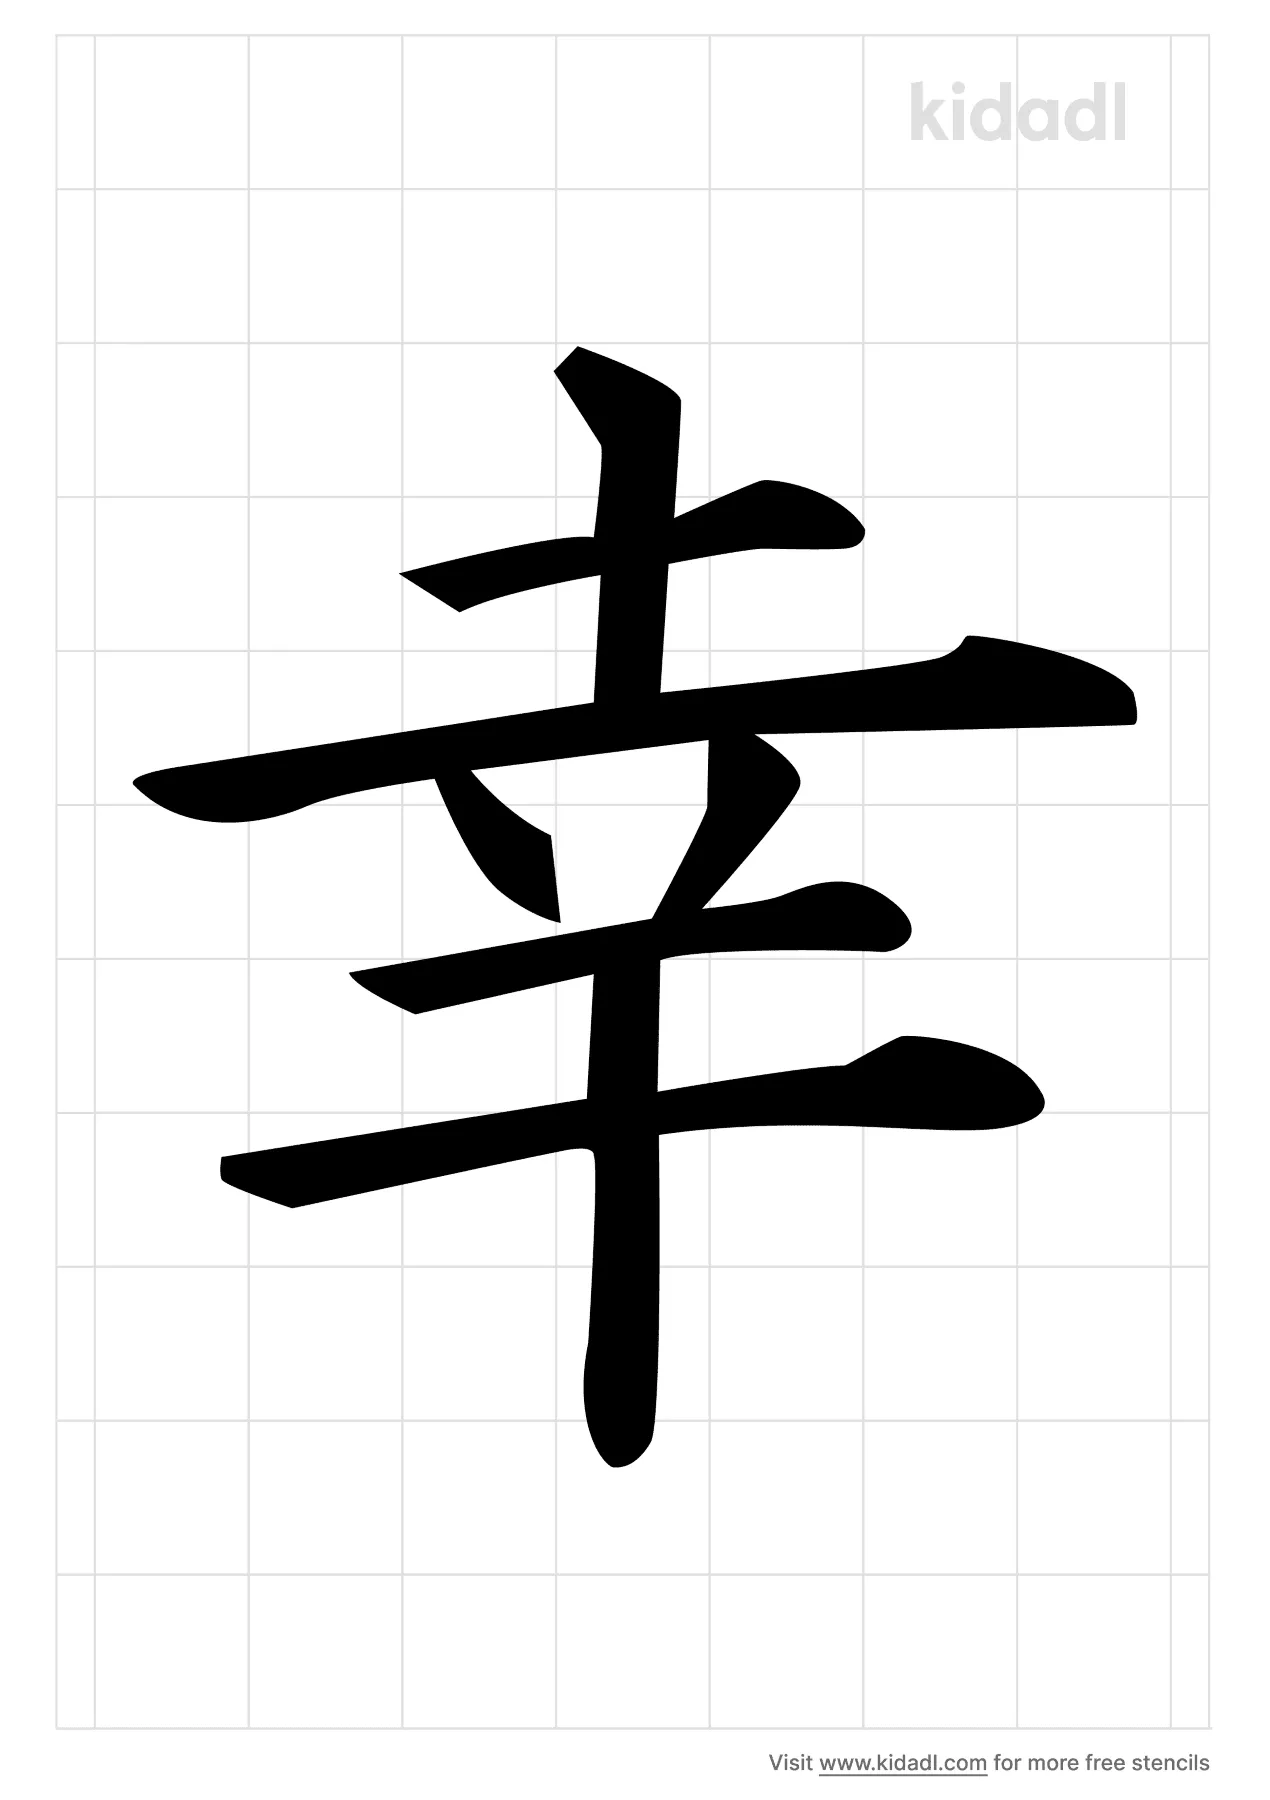 Фортуна иероглиф японский